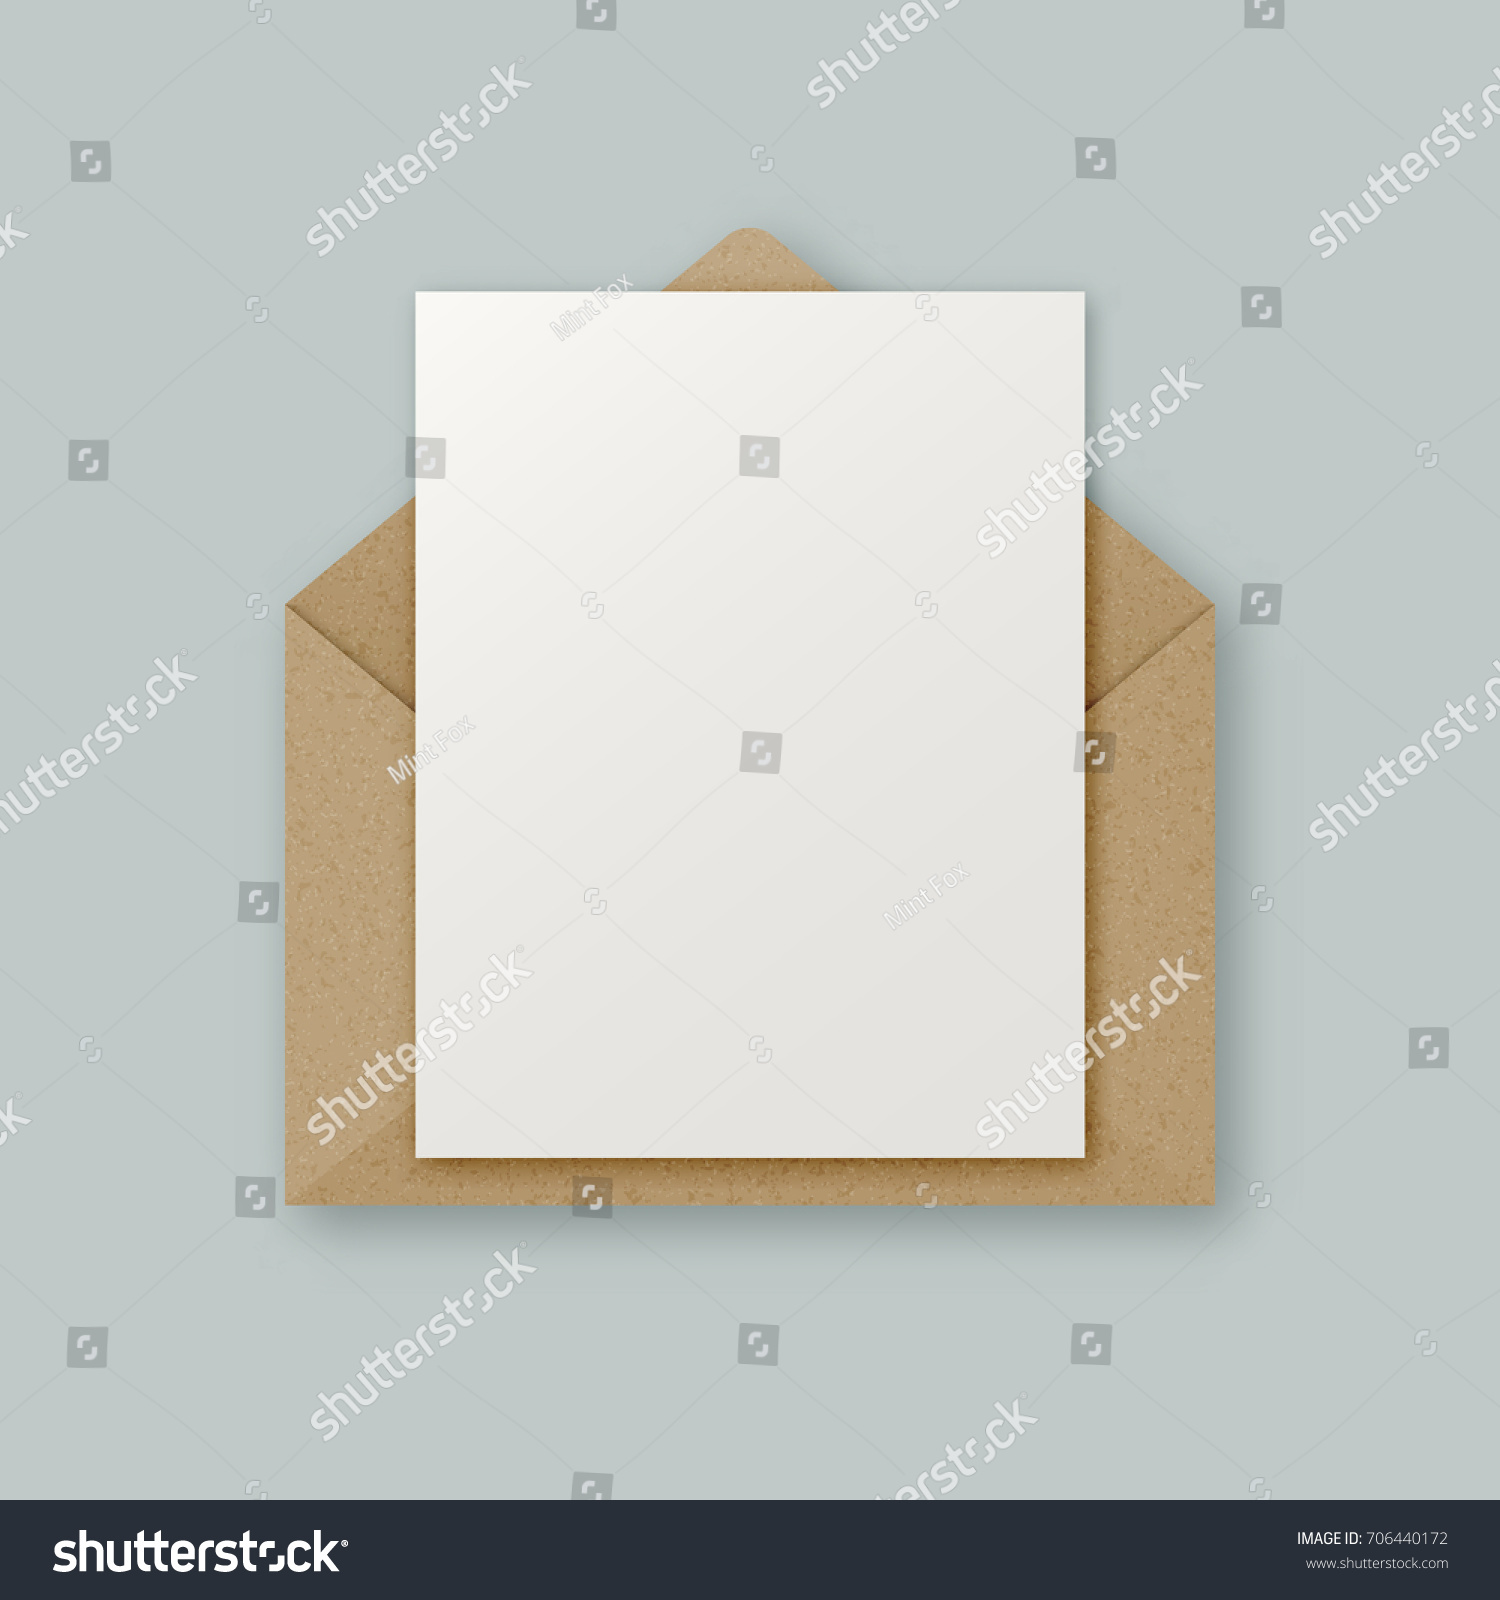 brown kraft paper sheets